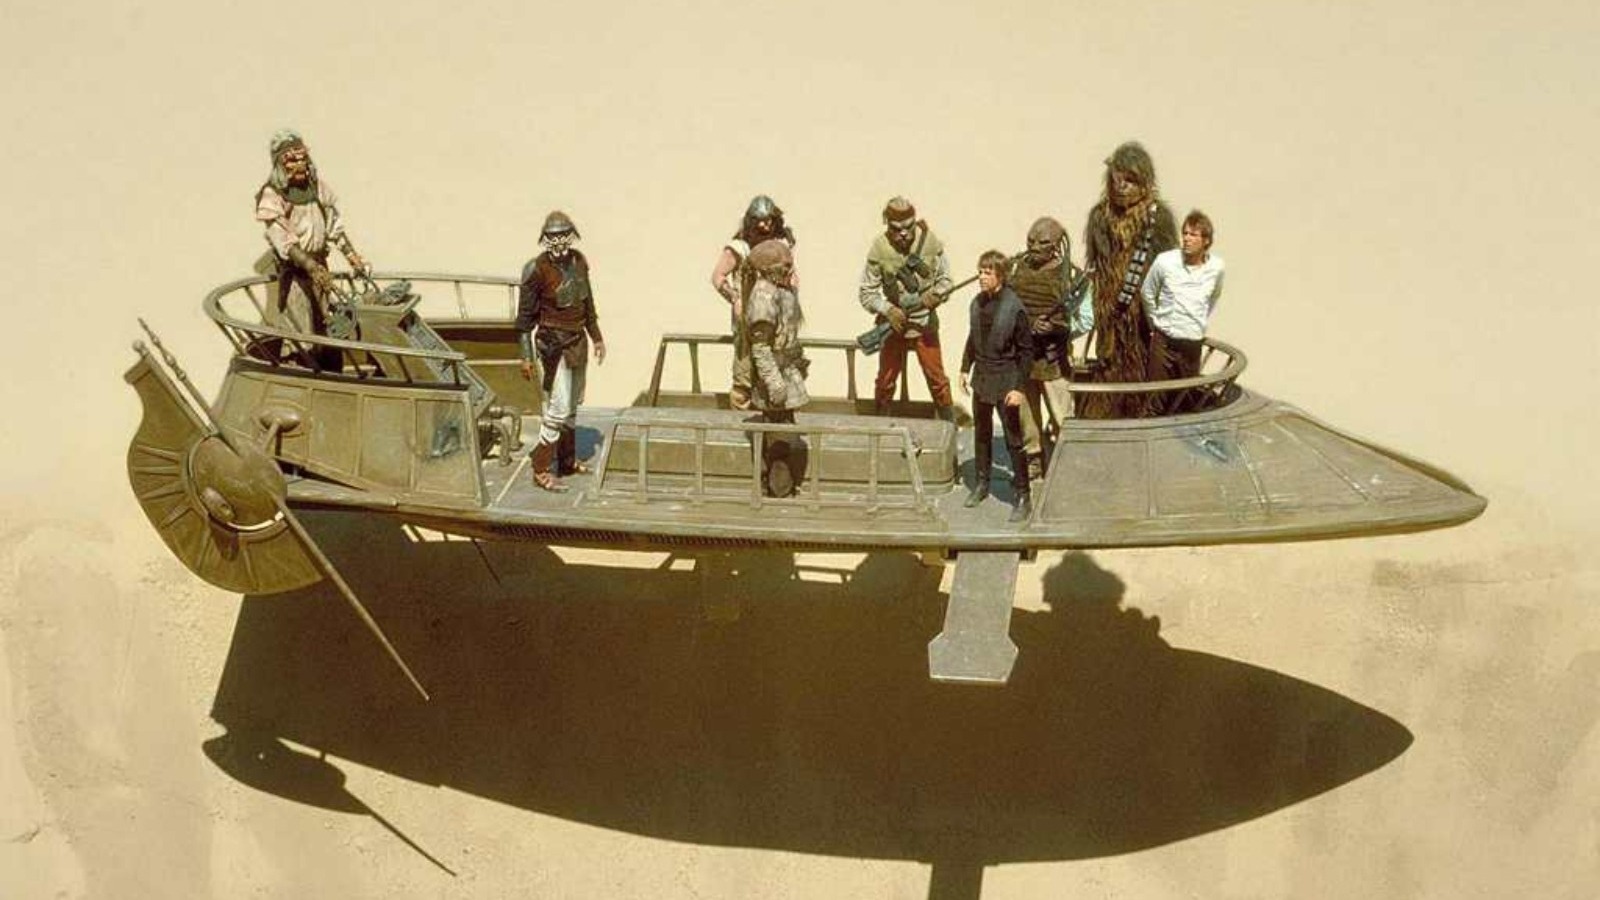 Return of the Jedi Crew Shared Anakin’s Attitude To The Film’s Fake Sand